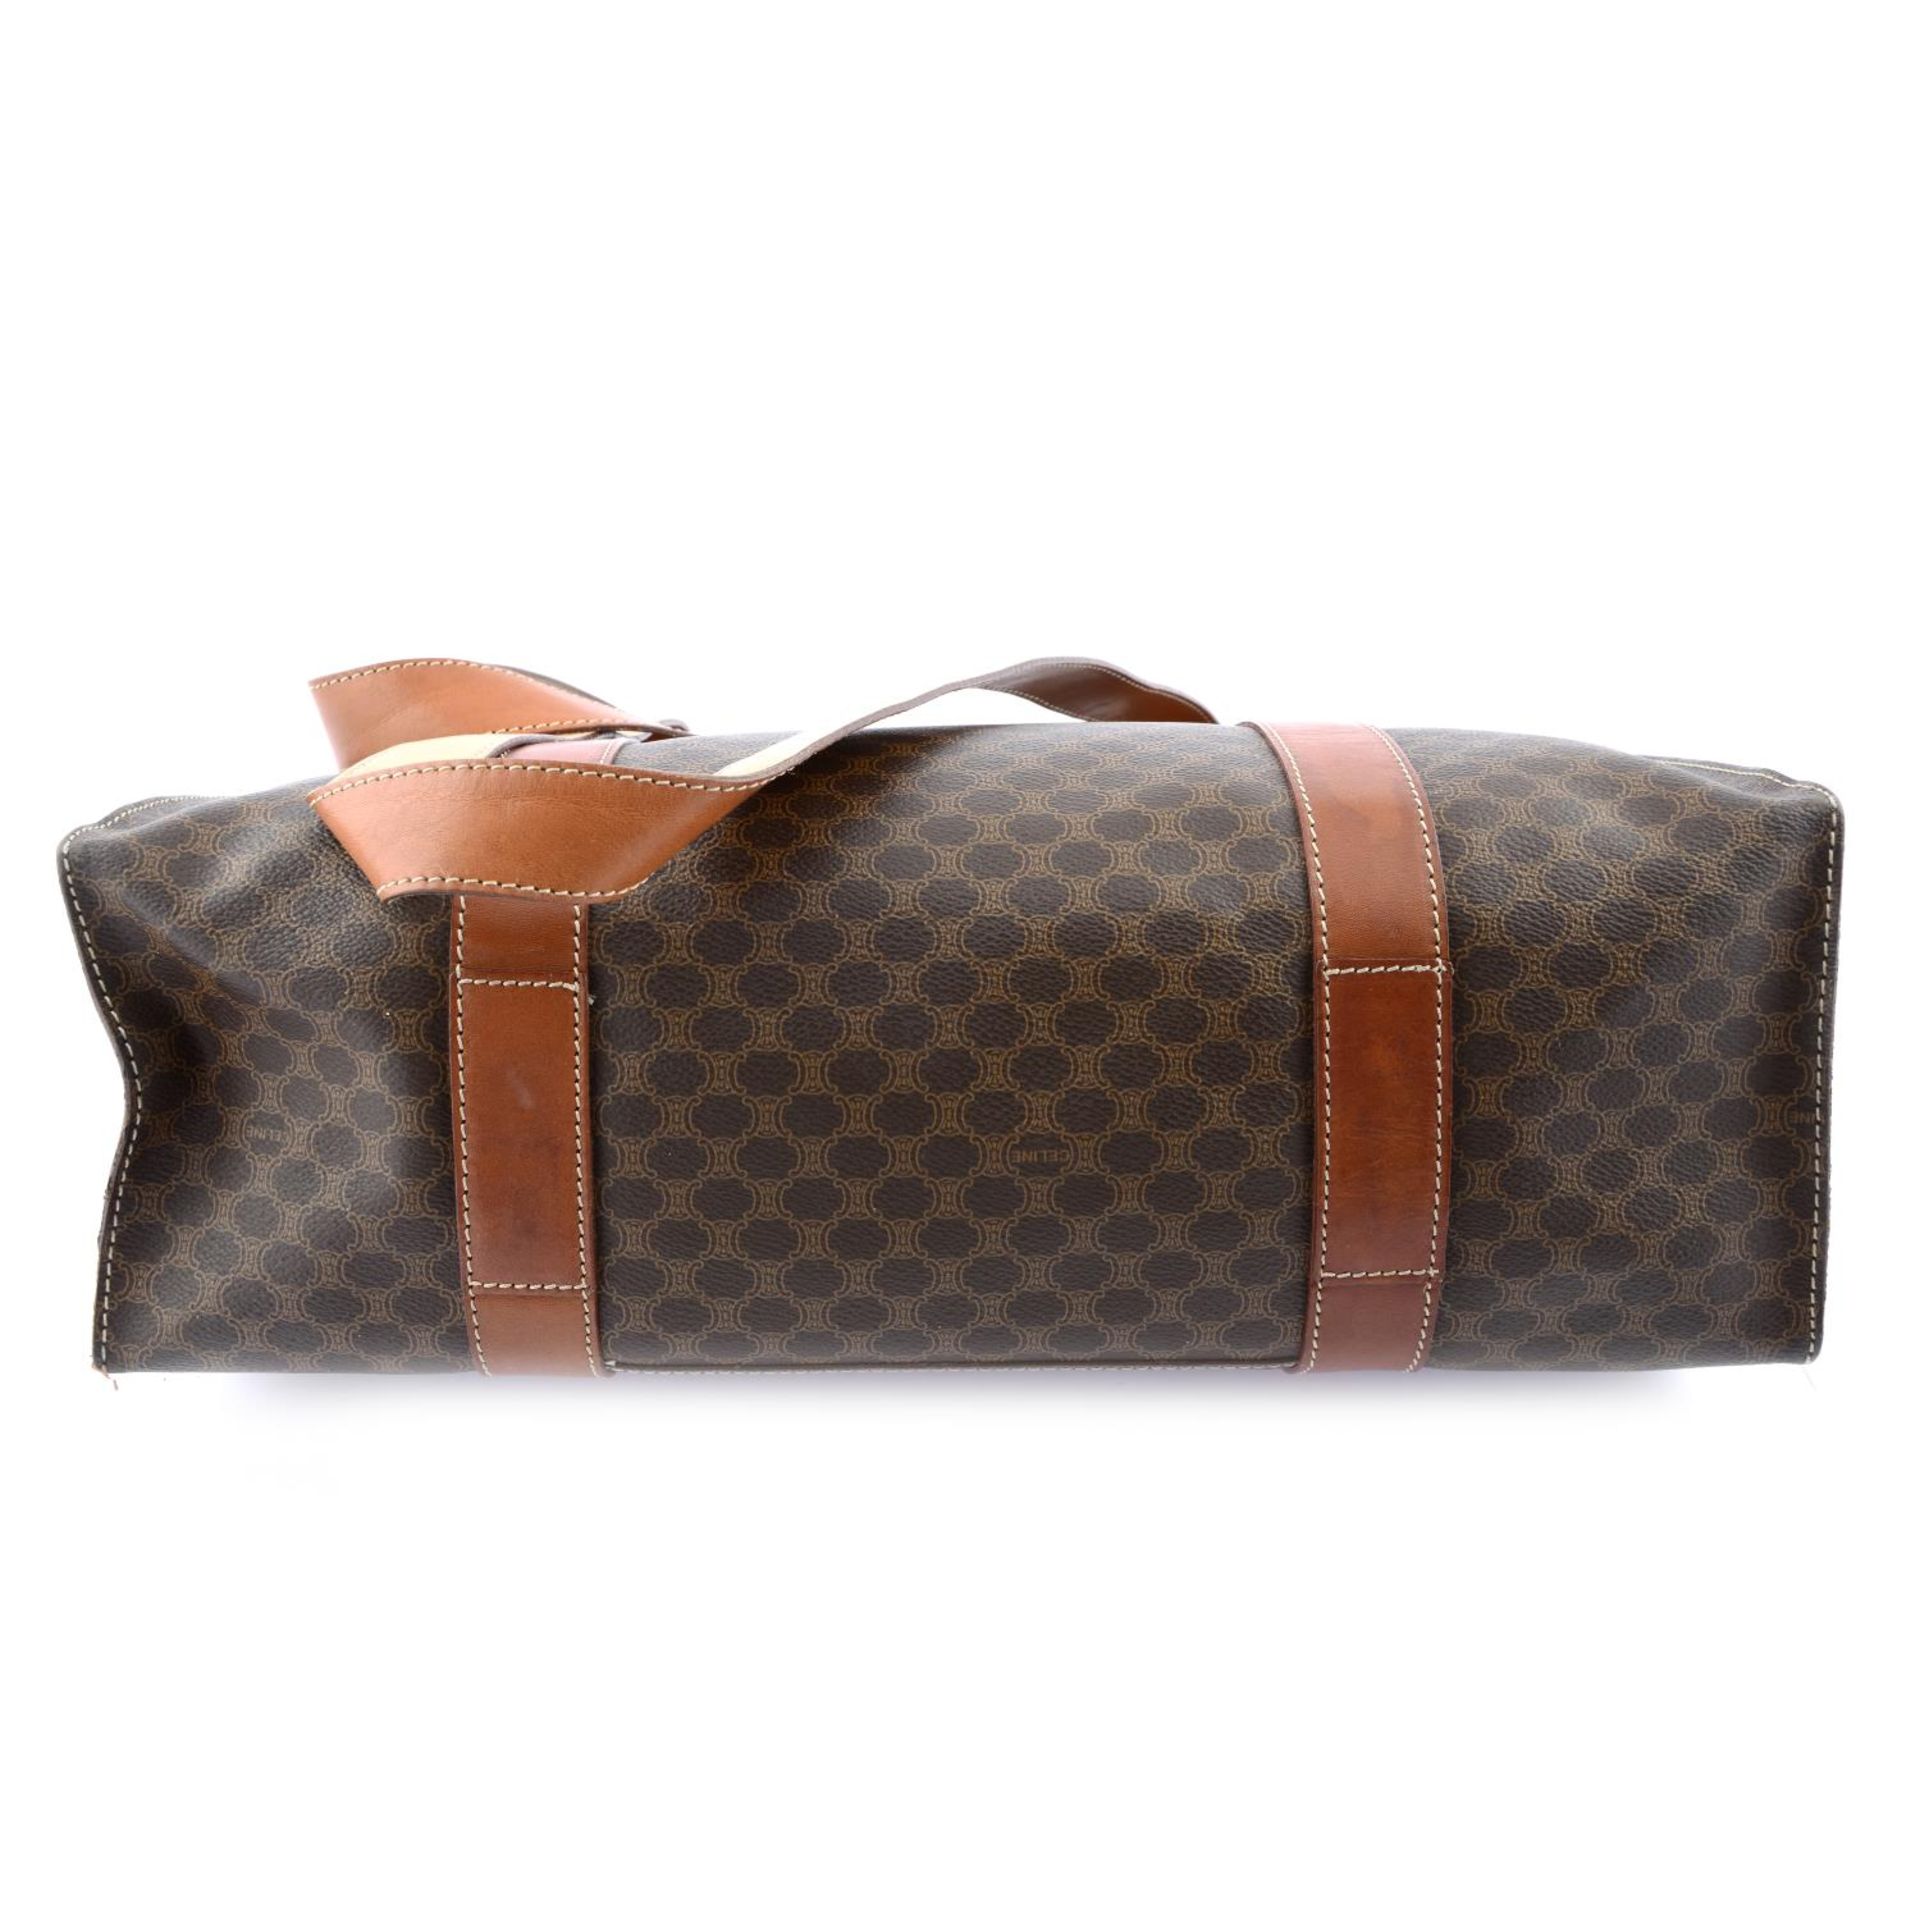 CÉLINE - a Macadam coated canvas handbag. - Bild 3 aus 7